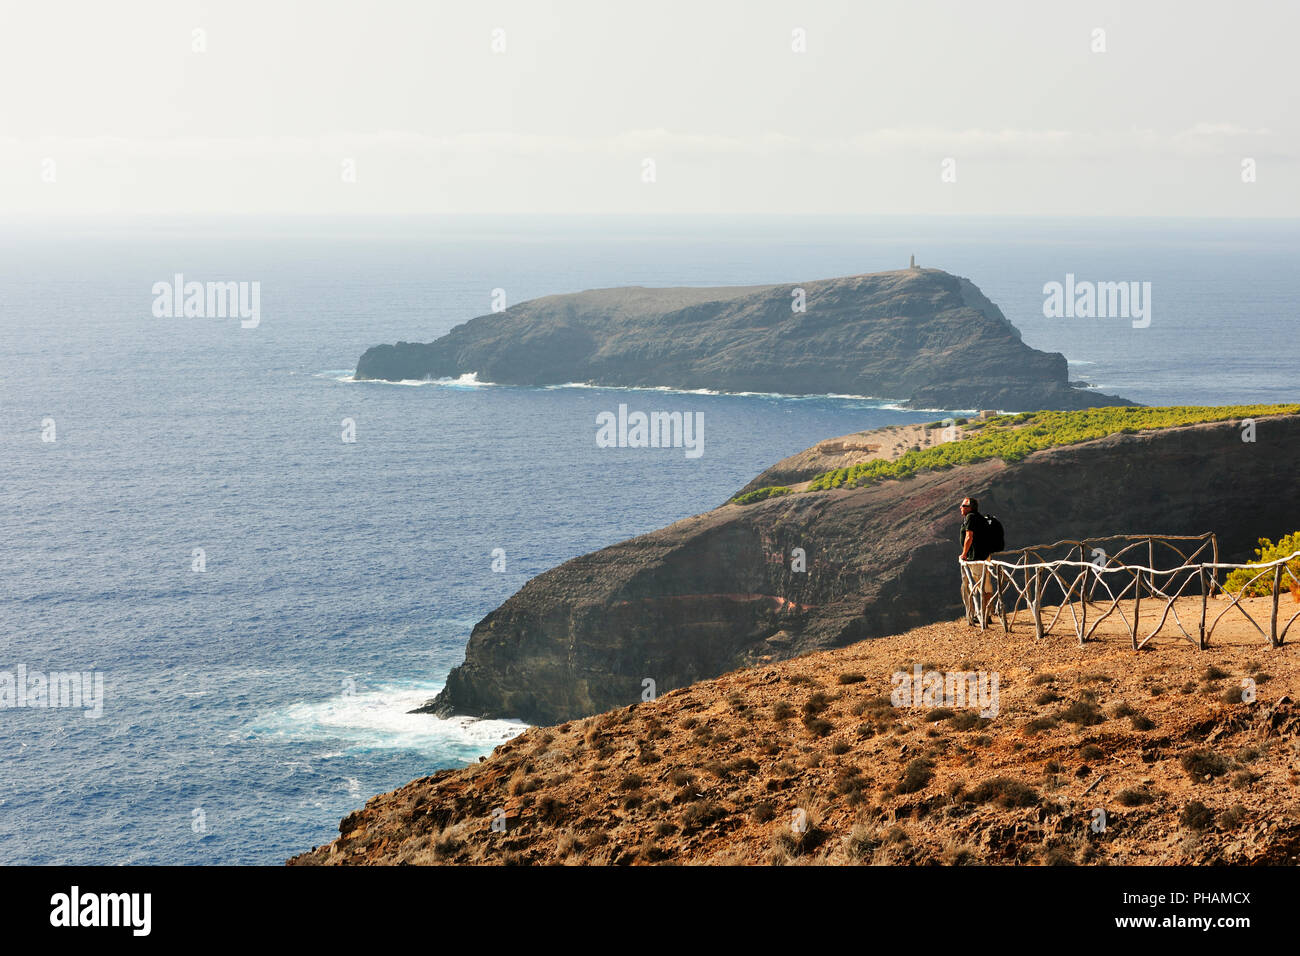 View of Ilhéu do Ferro. Porto Santo island, Madeira. Portugal Stock Photo